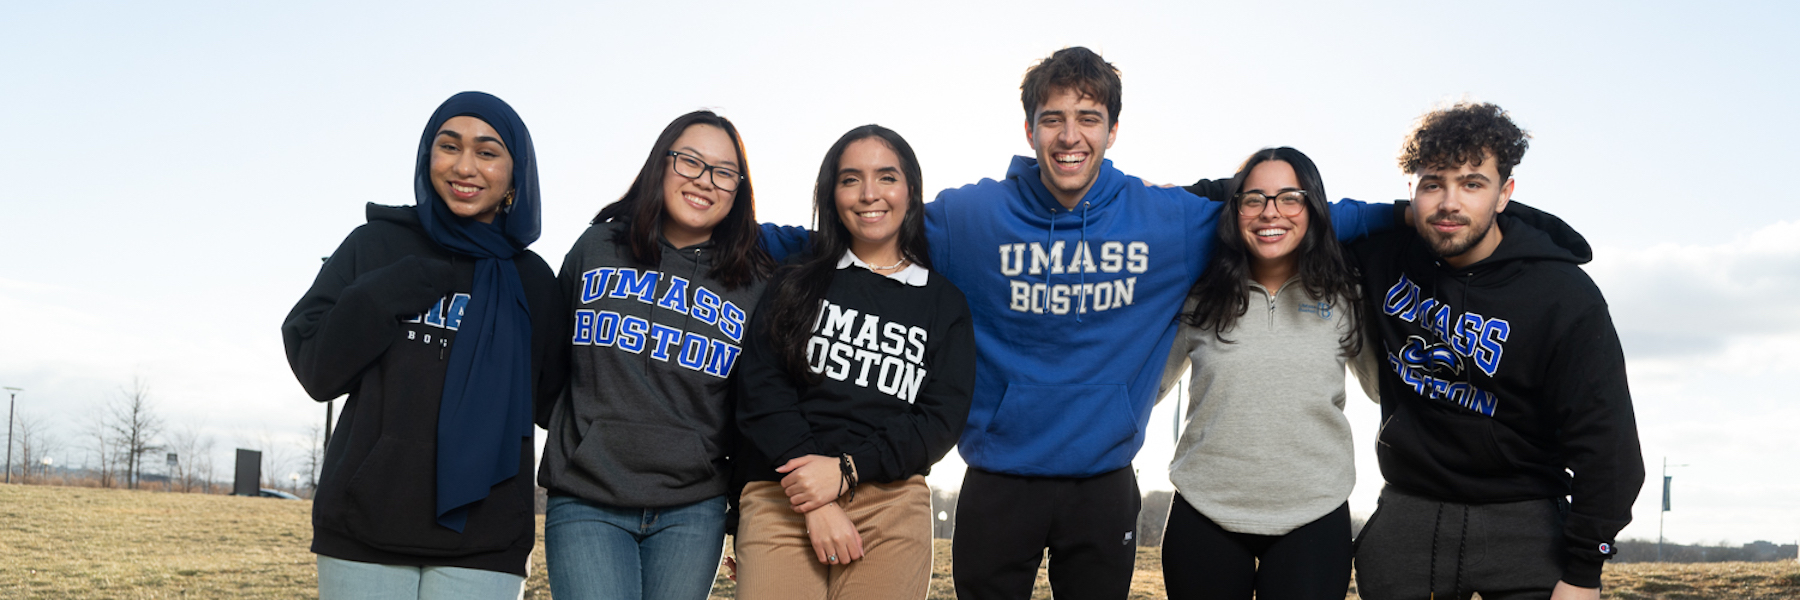 UMass Boston students wearing college gear